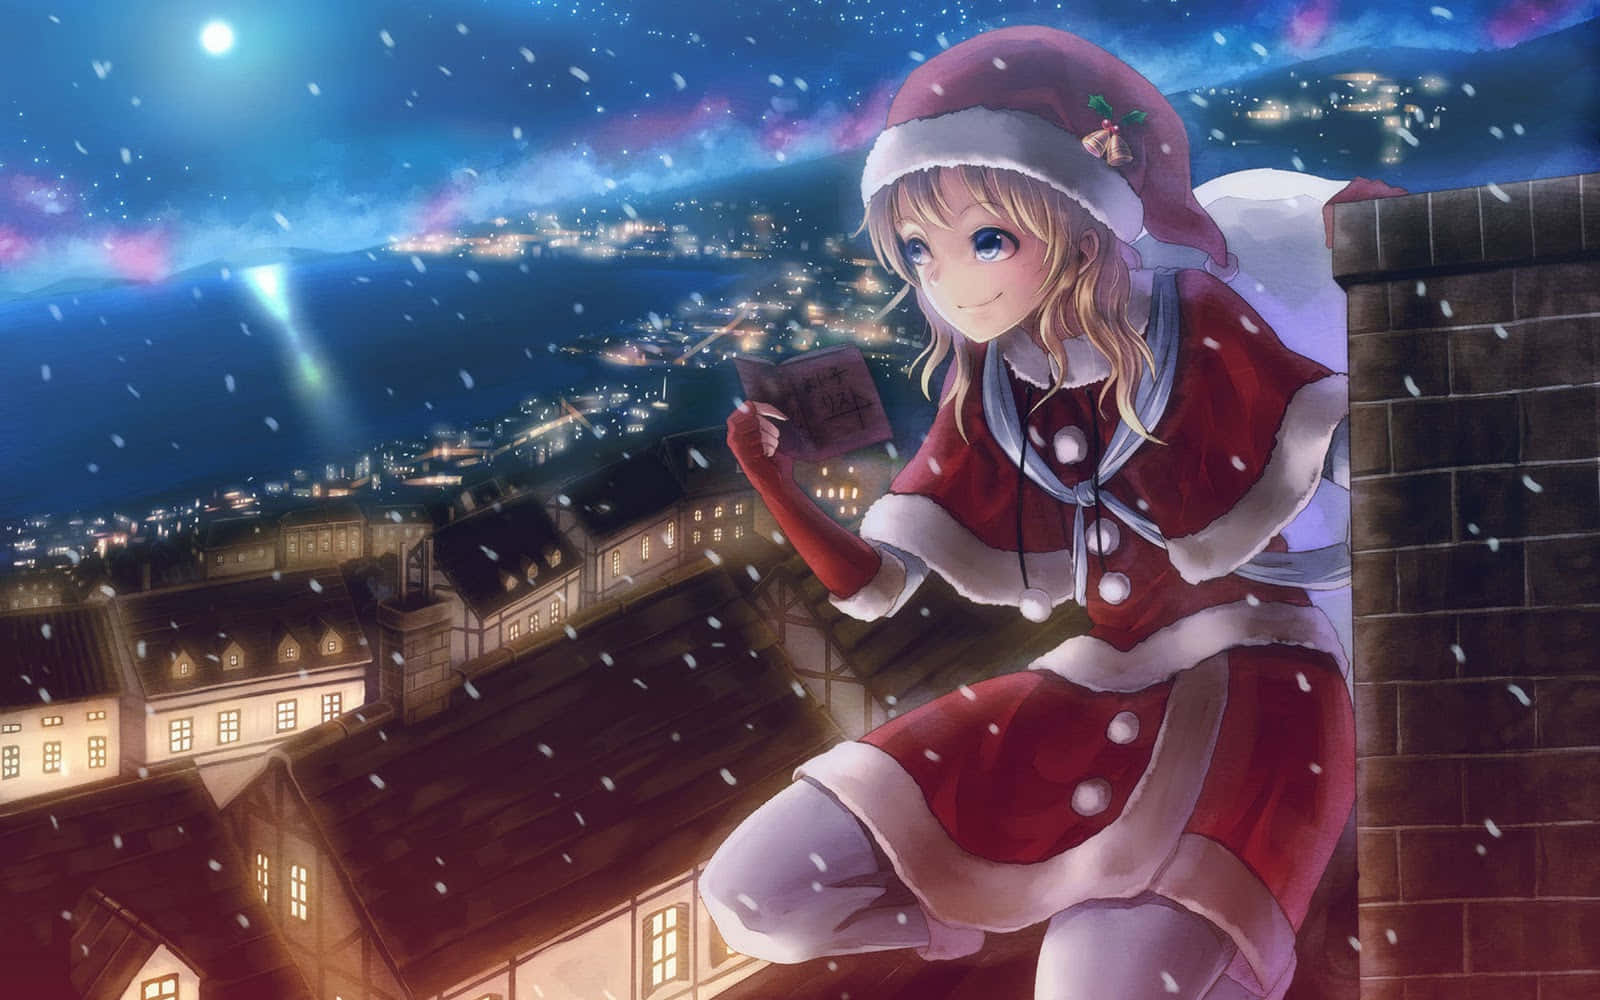 Celebrate the Magic of Christmas and Anime